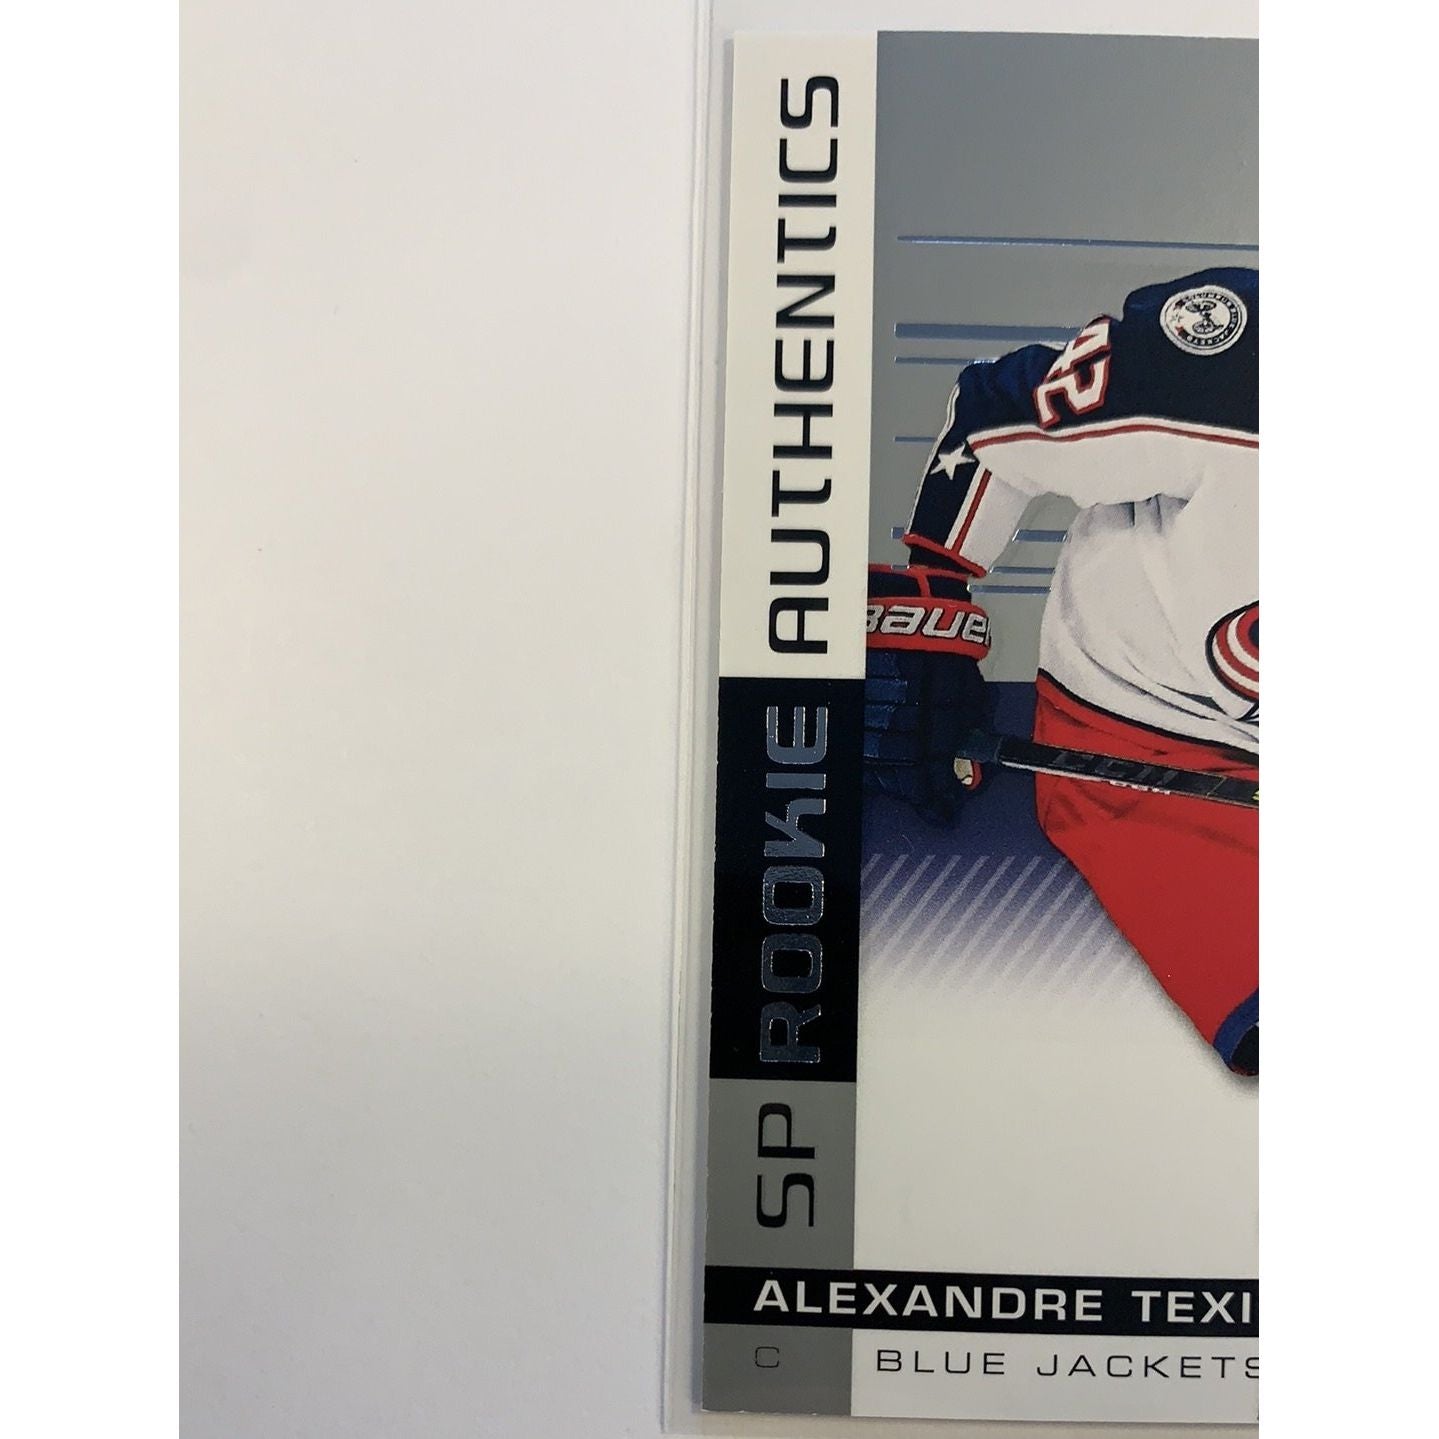  2019-20 SP Alexandre Texier Rookie Authentics /1199  Local Legends Cards & Collectibles